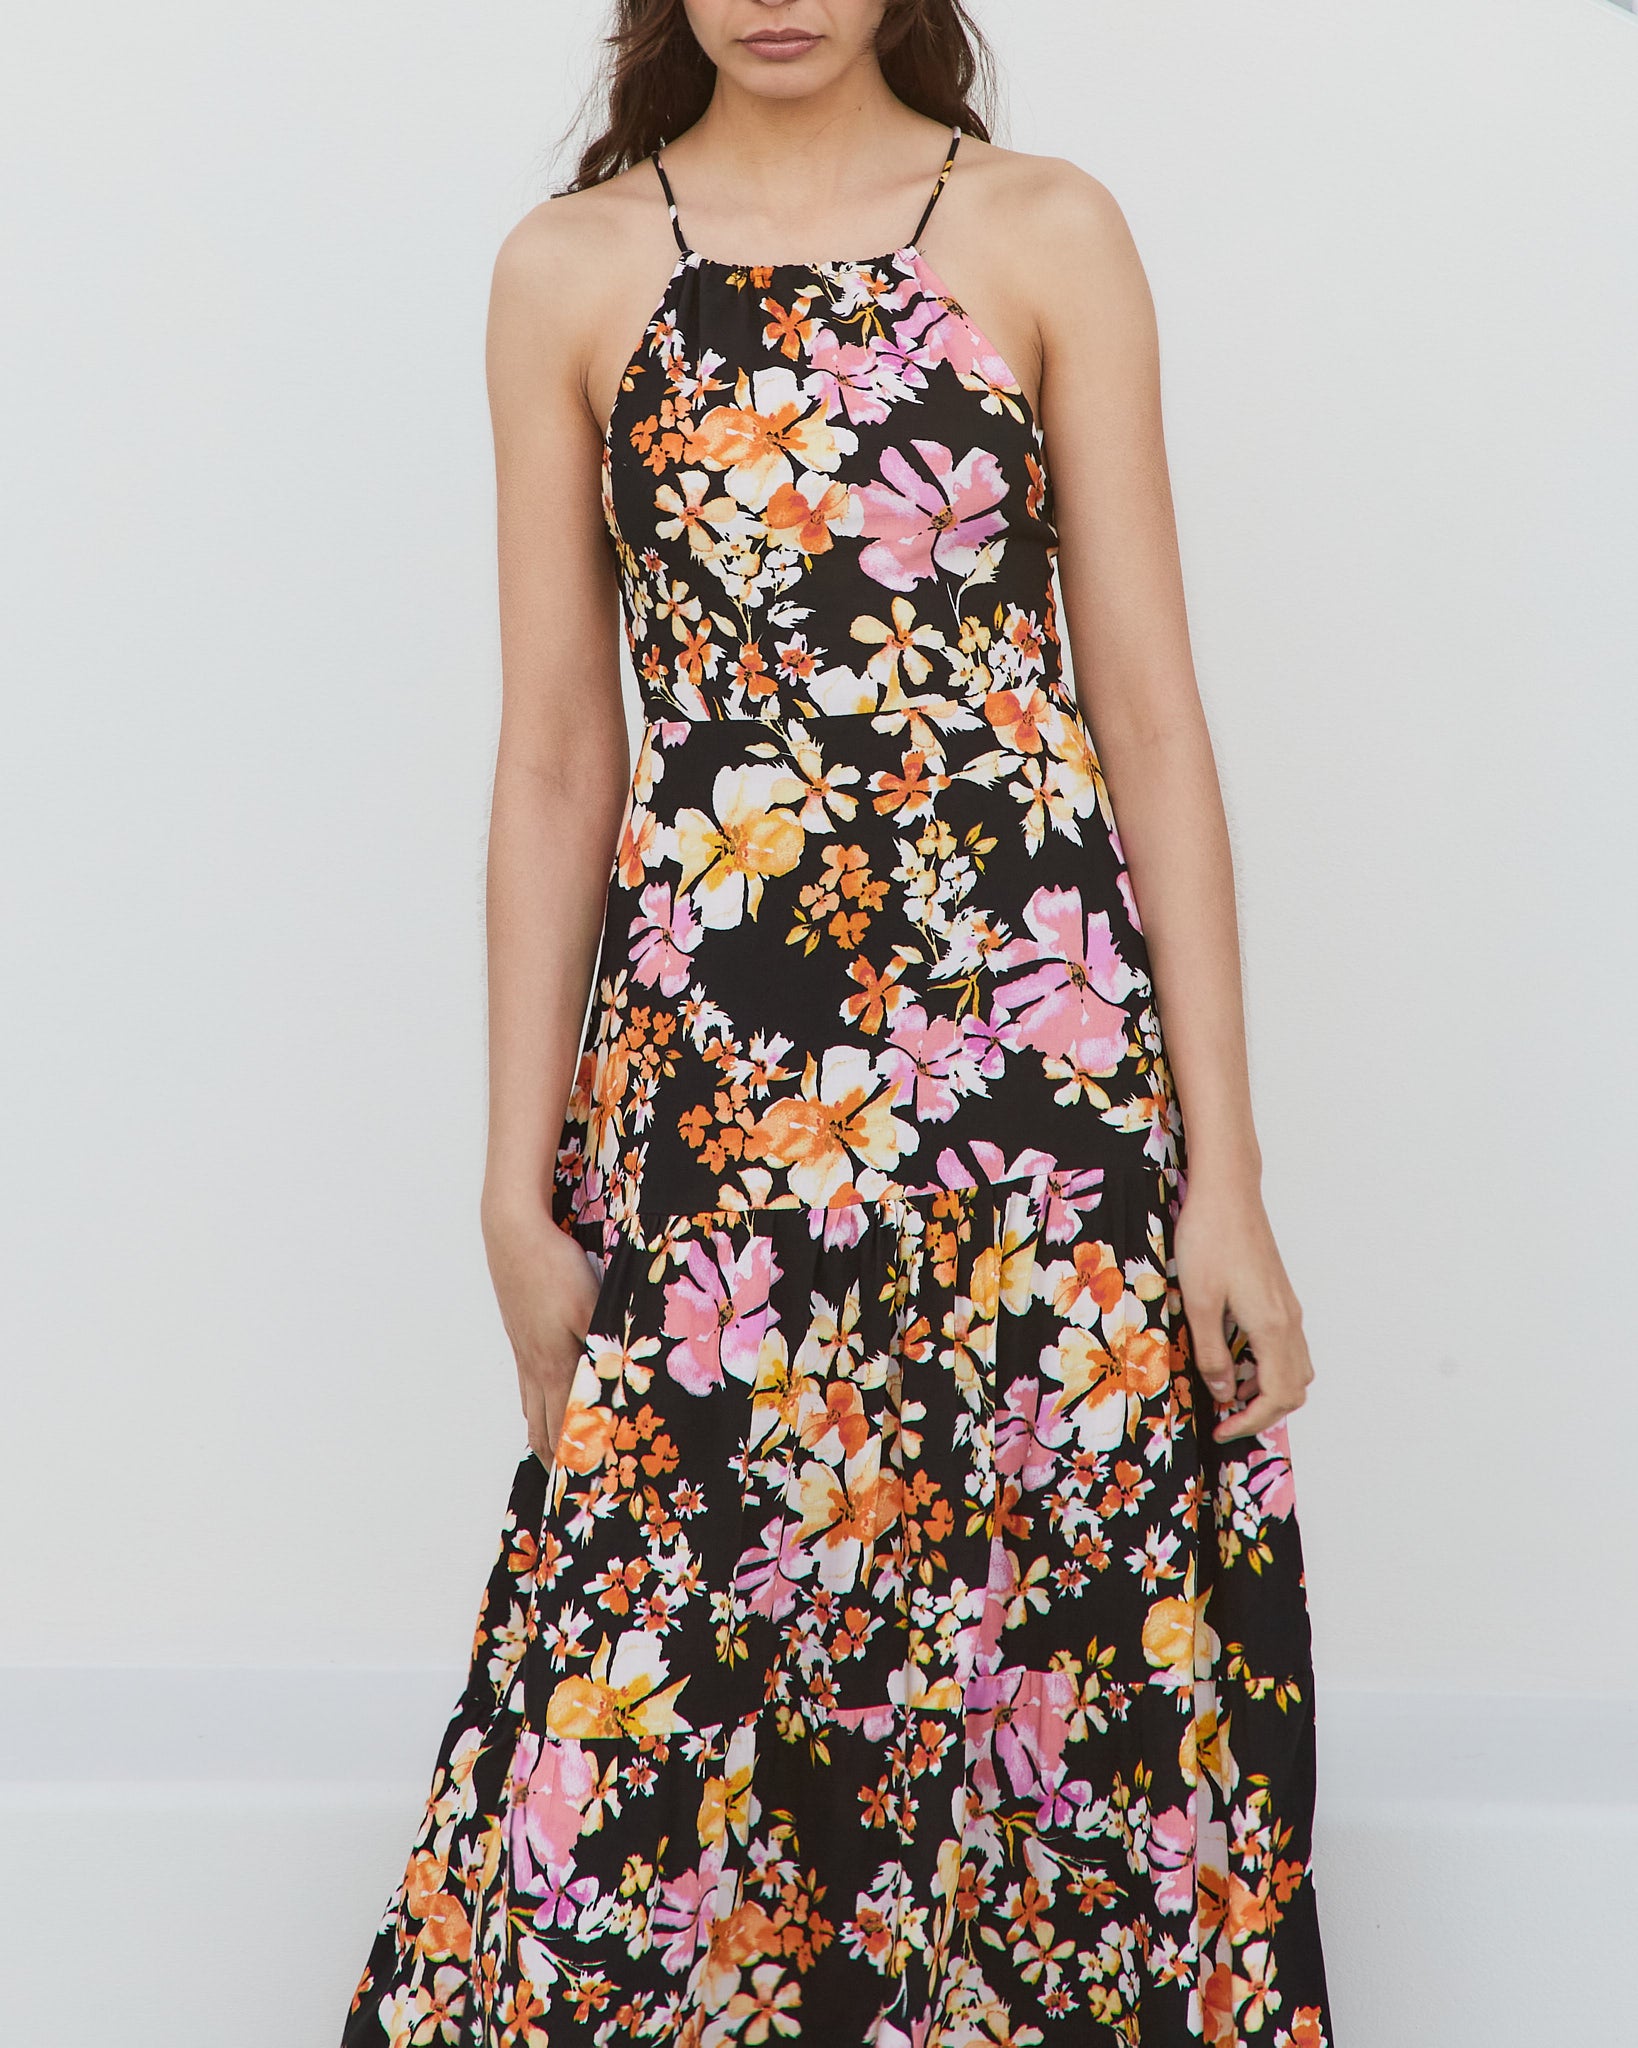 Kaylani Black Floral Maxi Dress